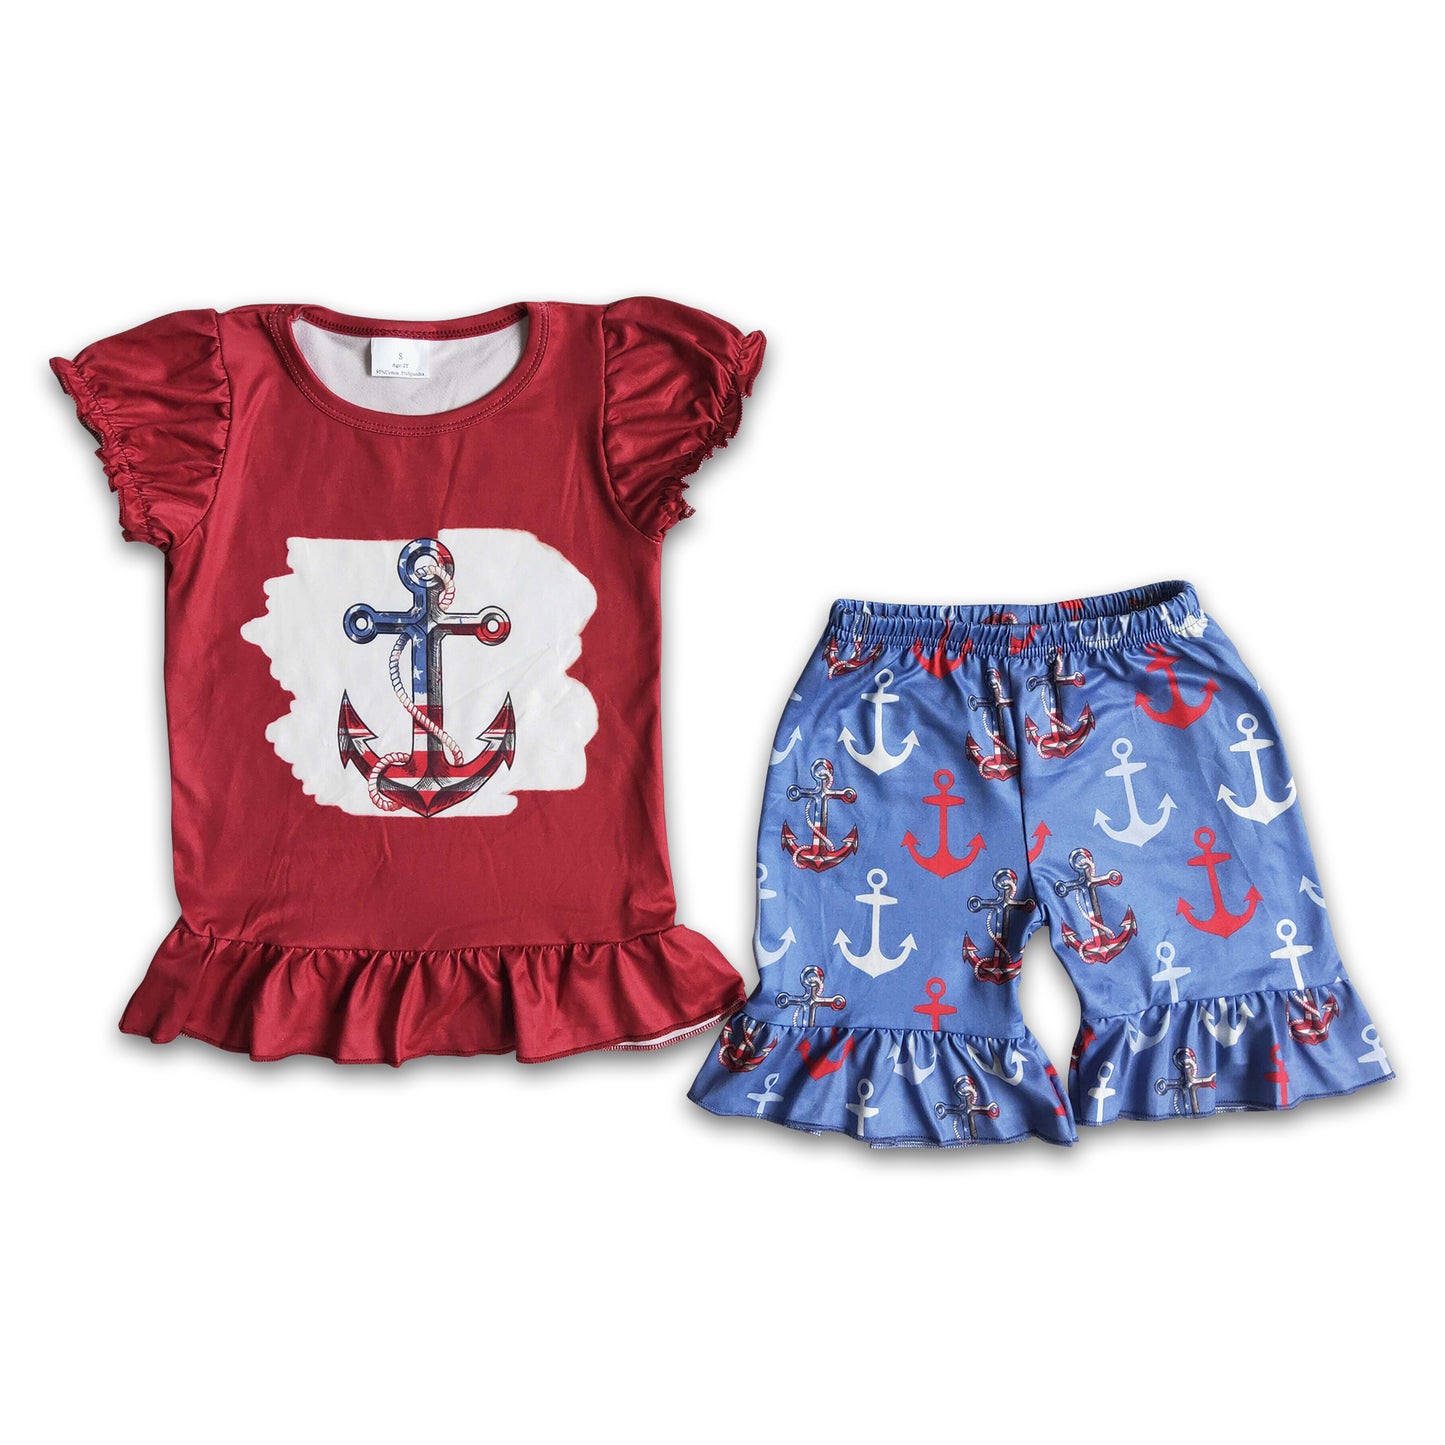 Anchor print shirt match shorts girls 4th of july set